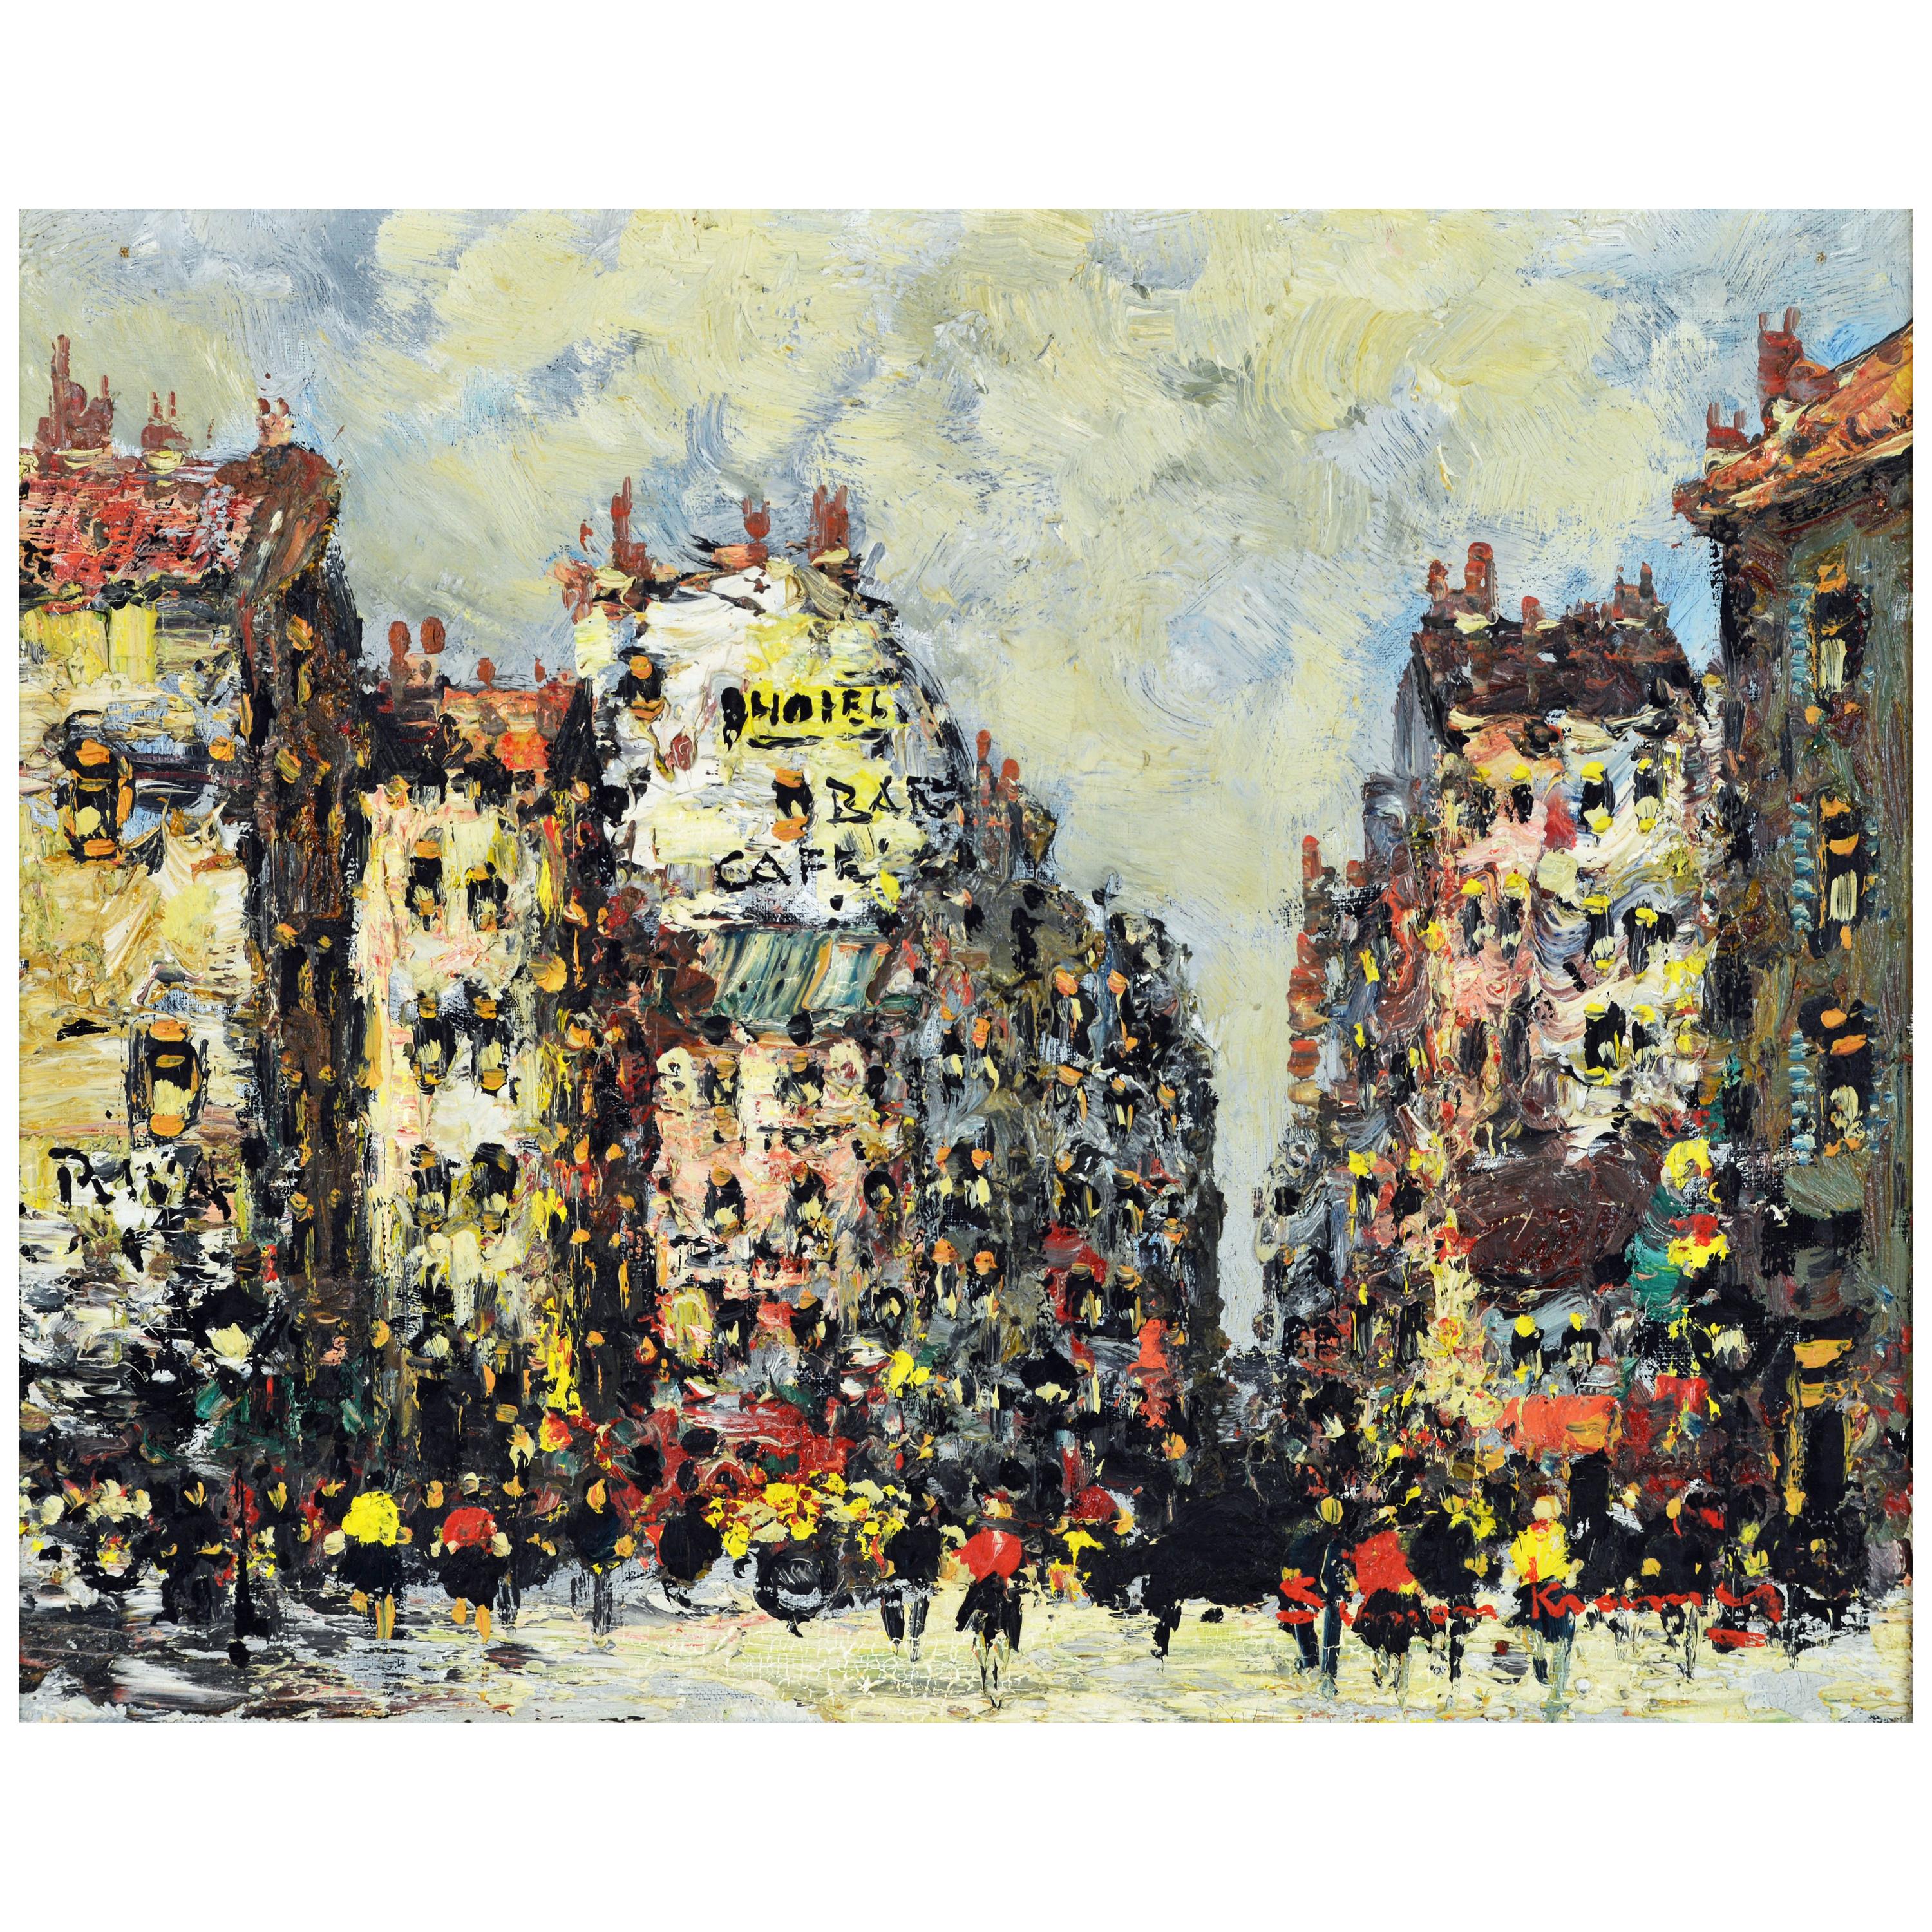 Lively Impressionist Style Paris Street Painting by Simon Kramer Dutch 1940-2015